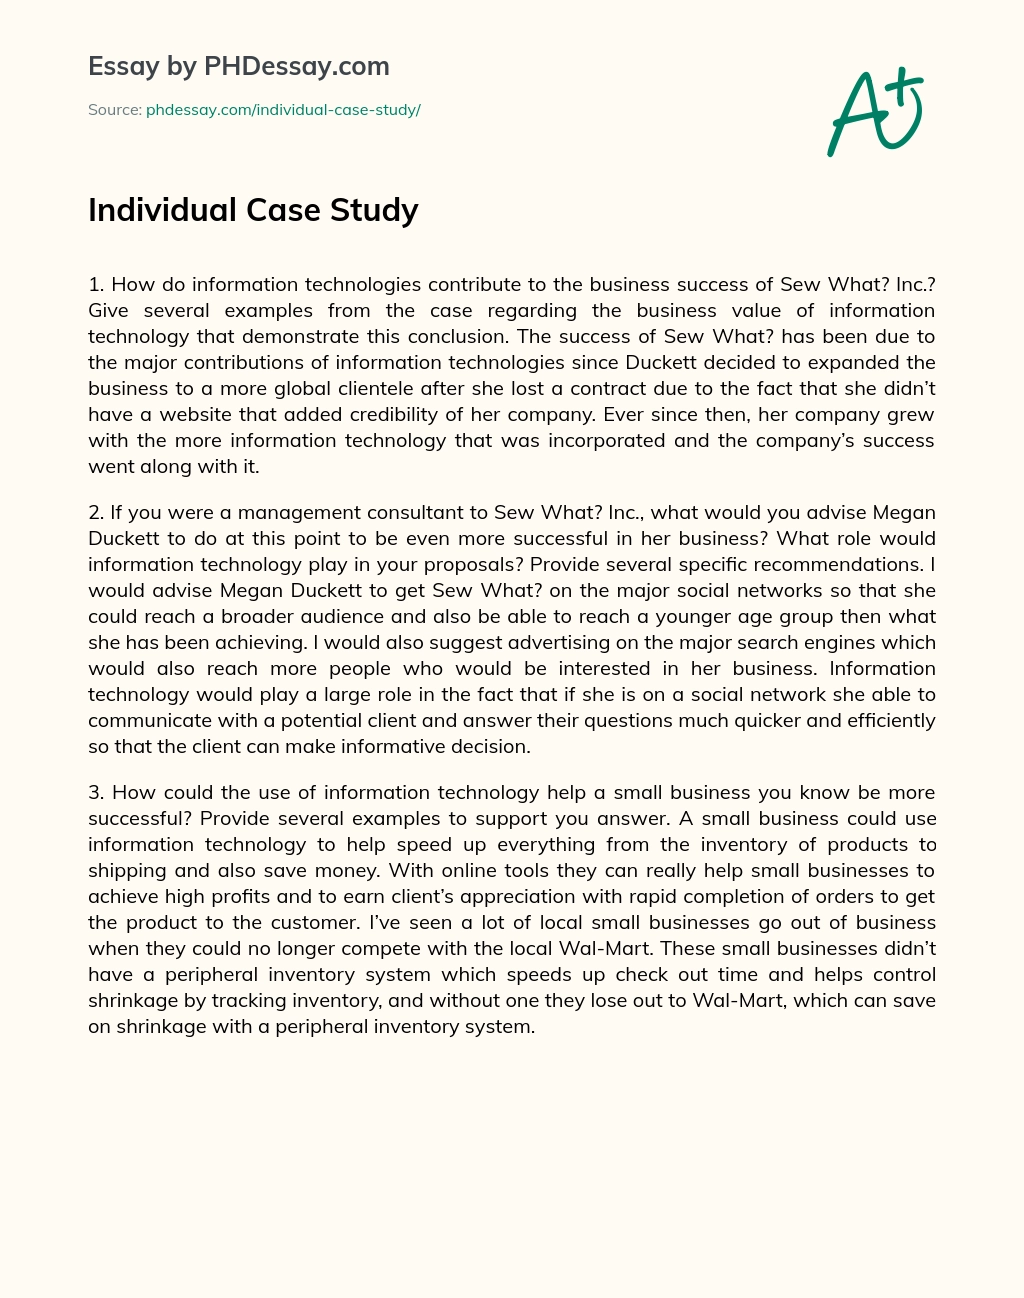 Individual Case Study essay